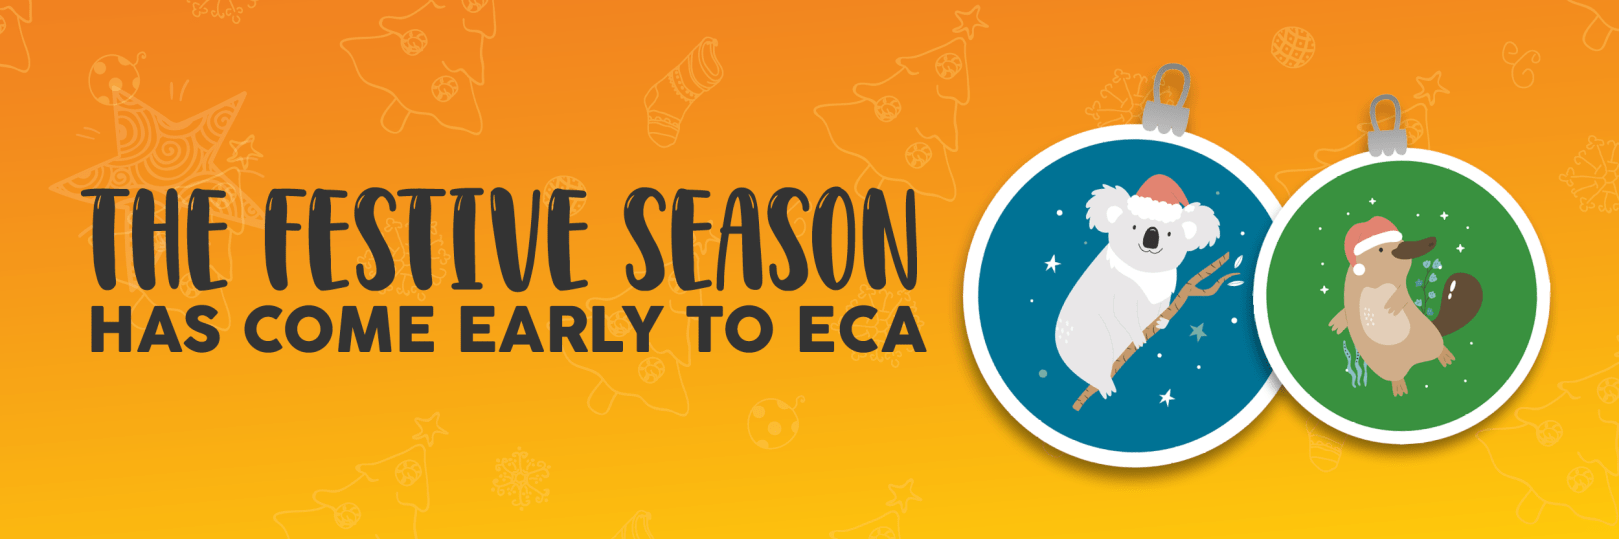 The festive season has come early to ECA banner